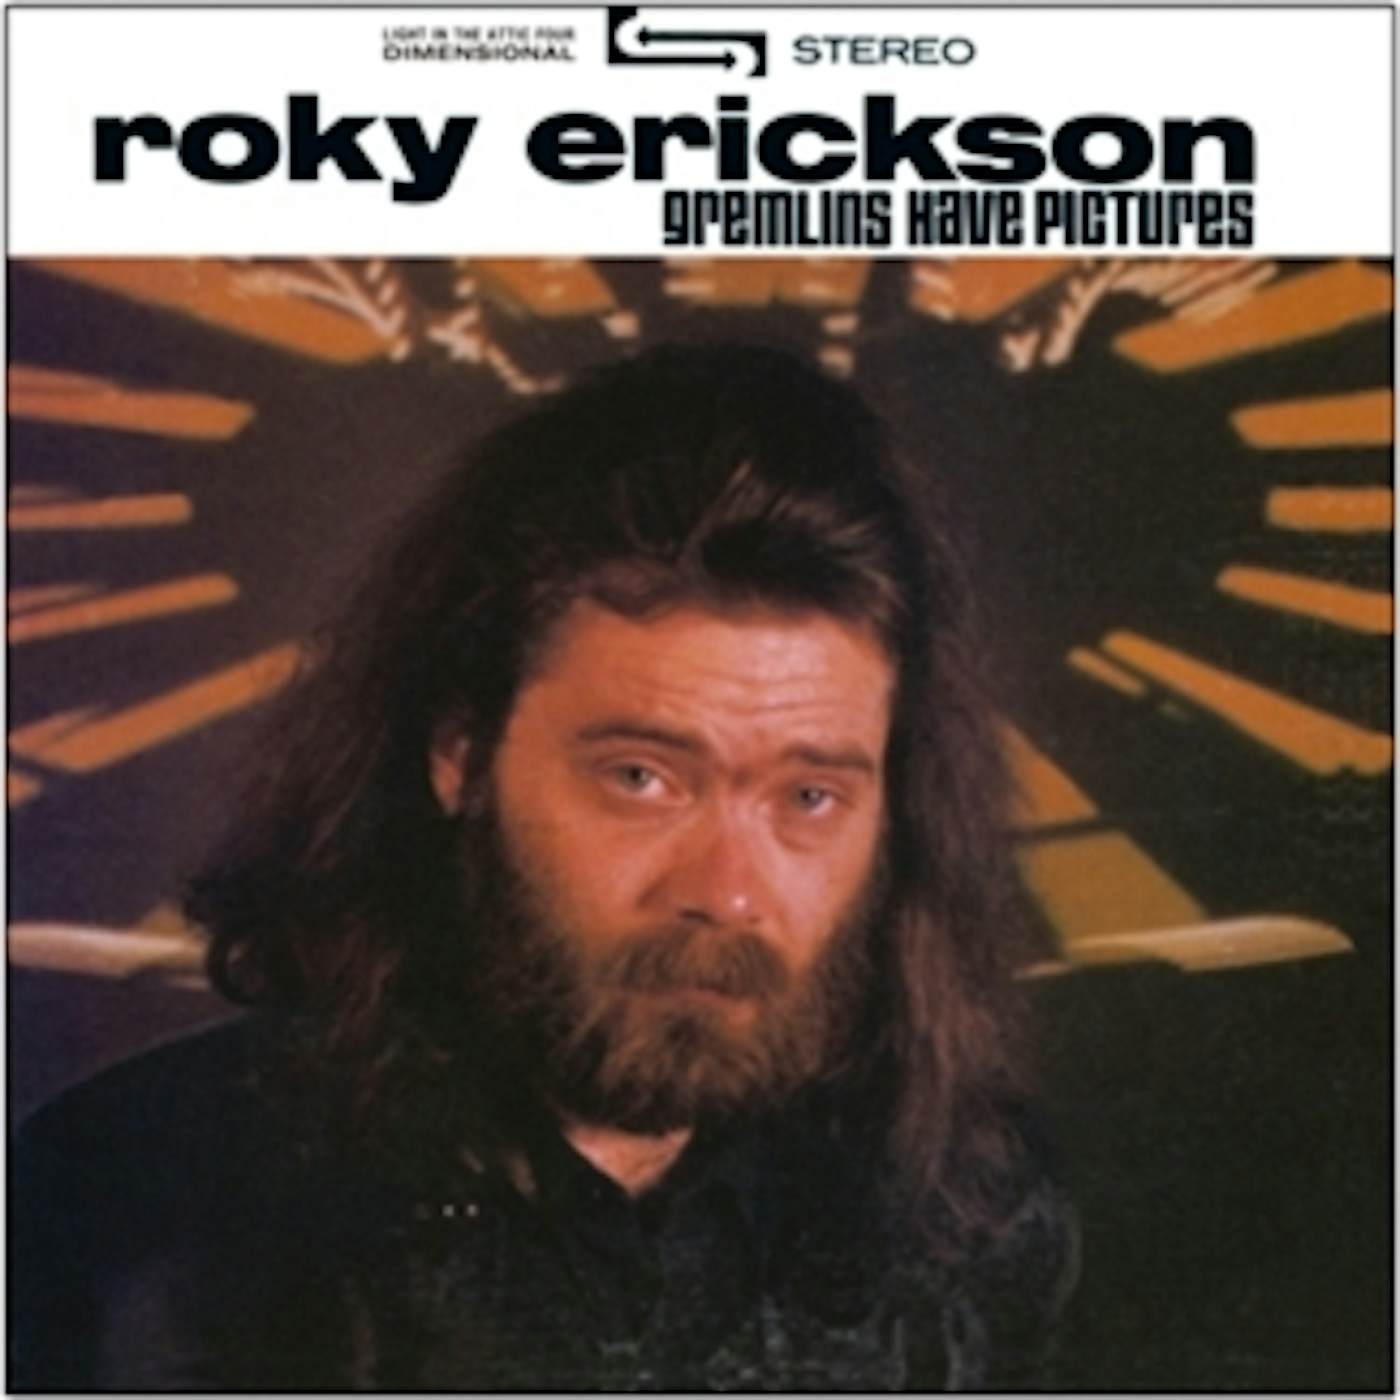 Roky Erickson GREMLINS HAVE PICTURES CD